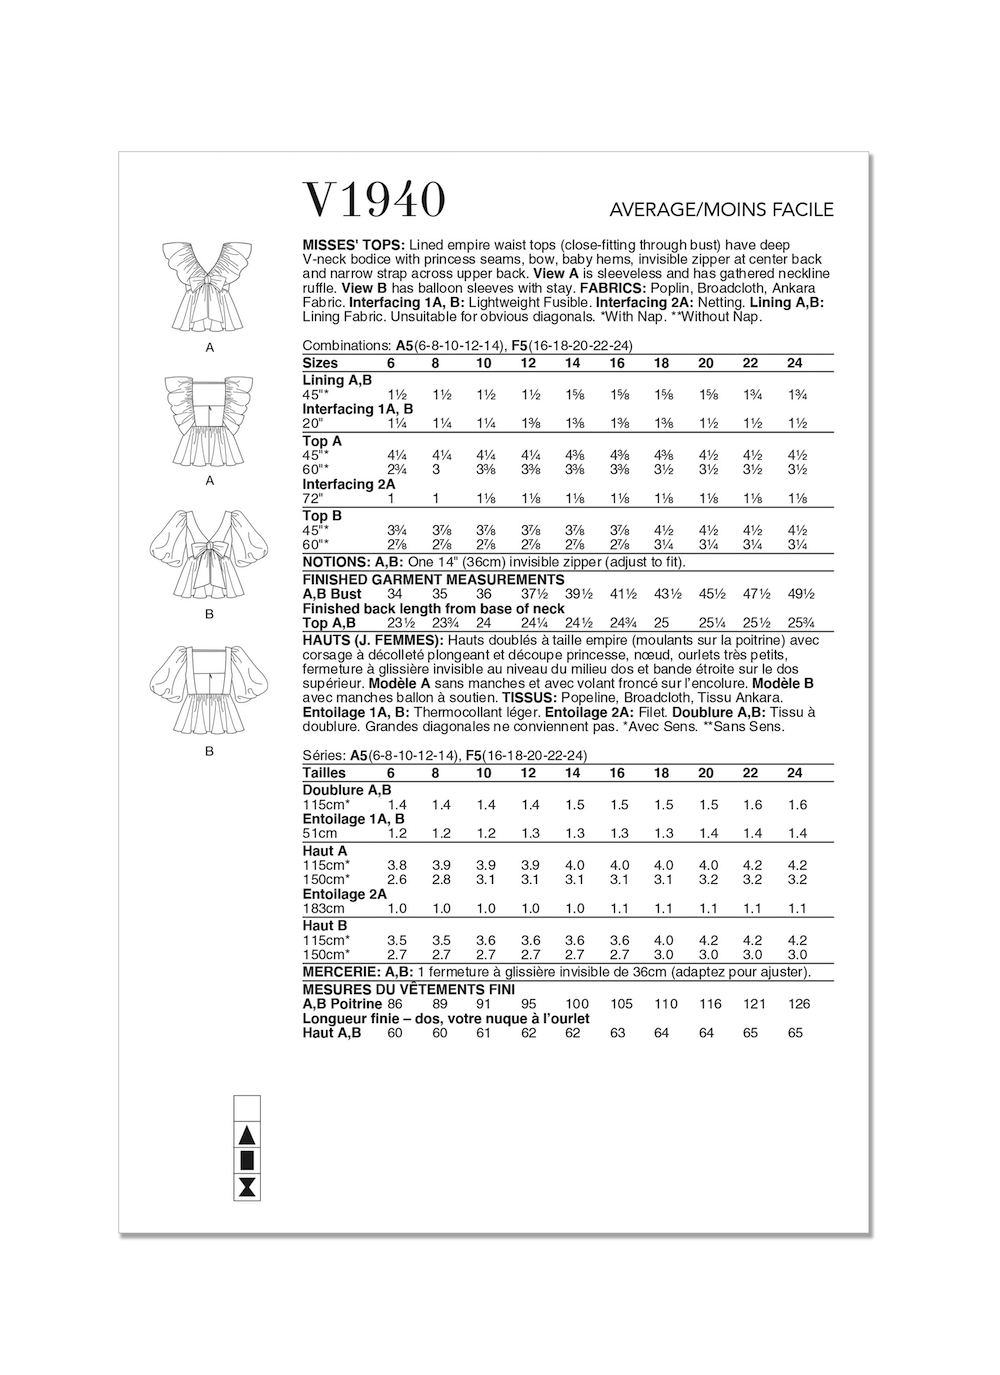 Vogue® Patterns Papierschnittmuster Bluse V1940